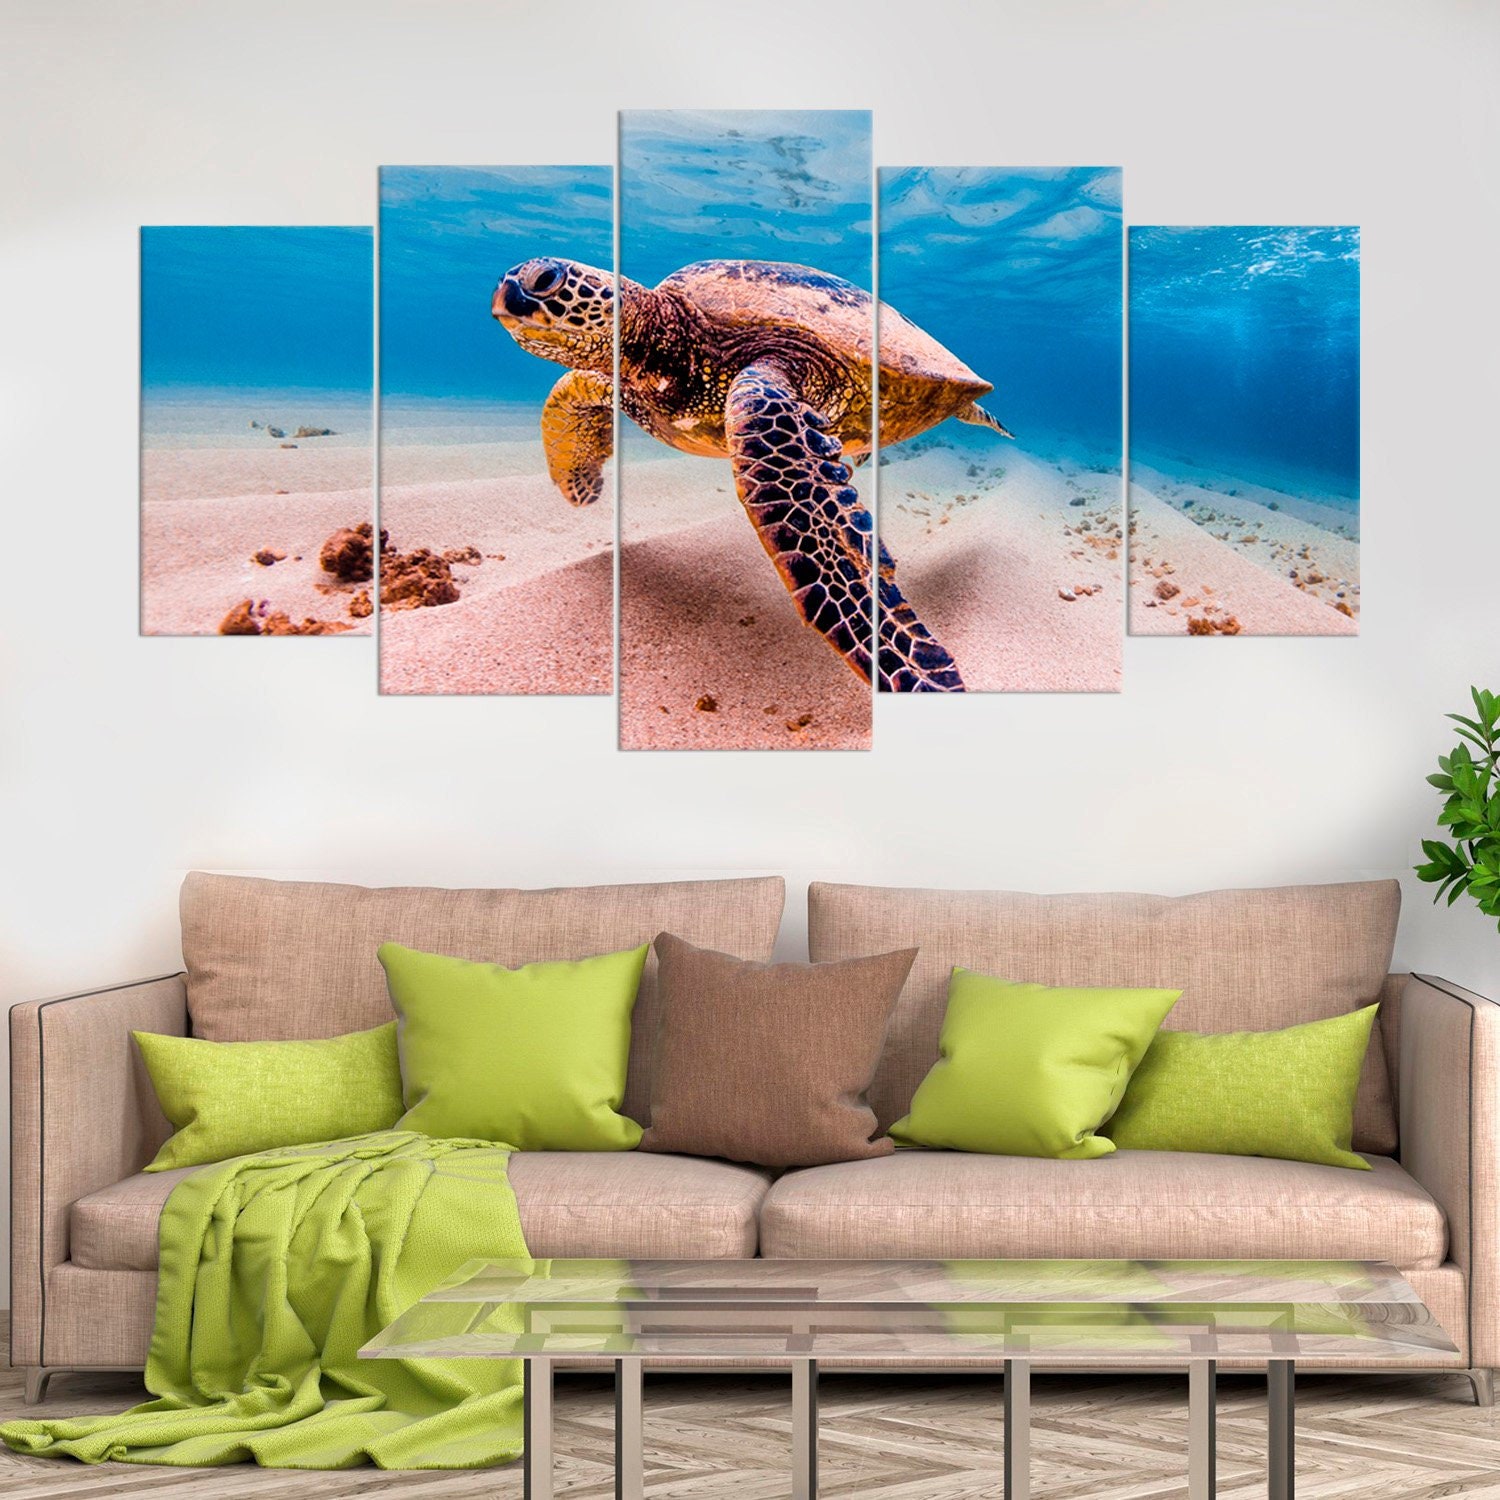 Cayman Turtle Canvas Print Sea Turtle Wall Art Underwater Wild | Etsy